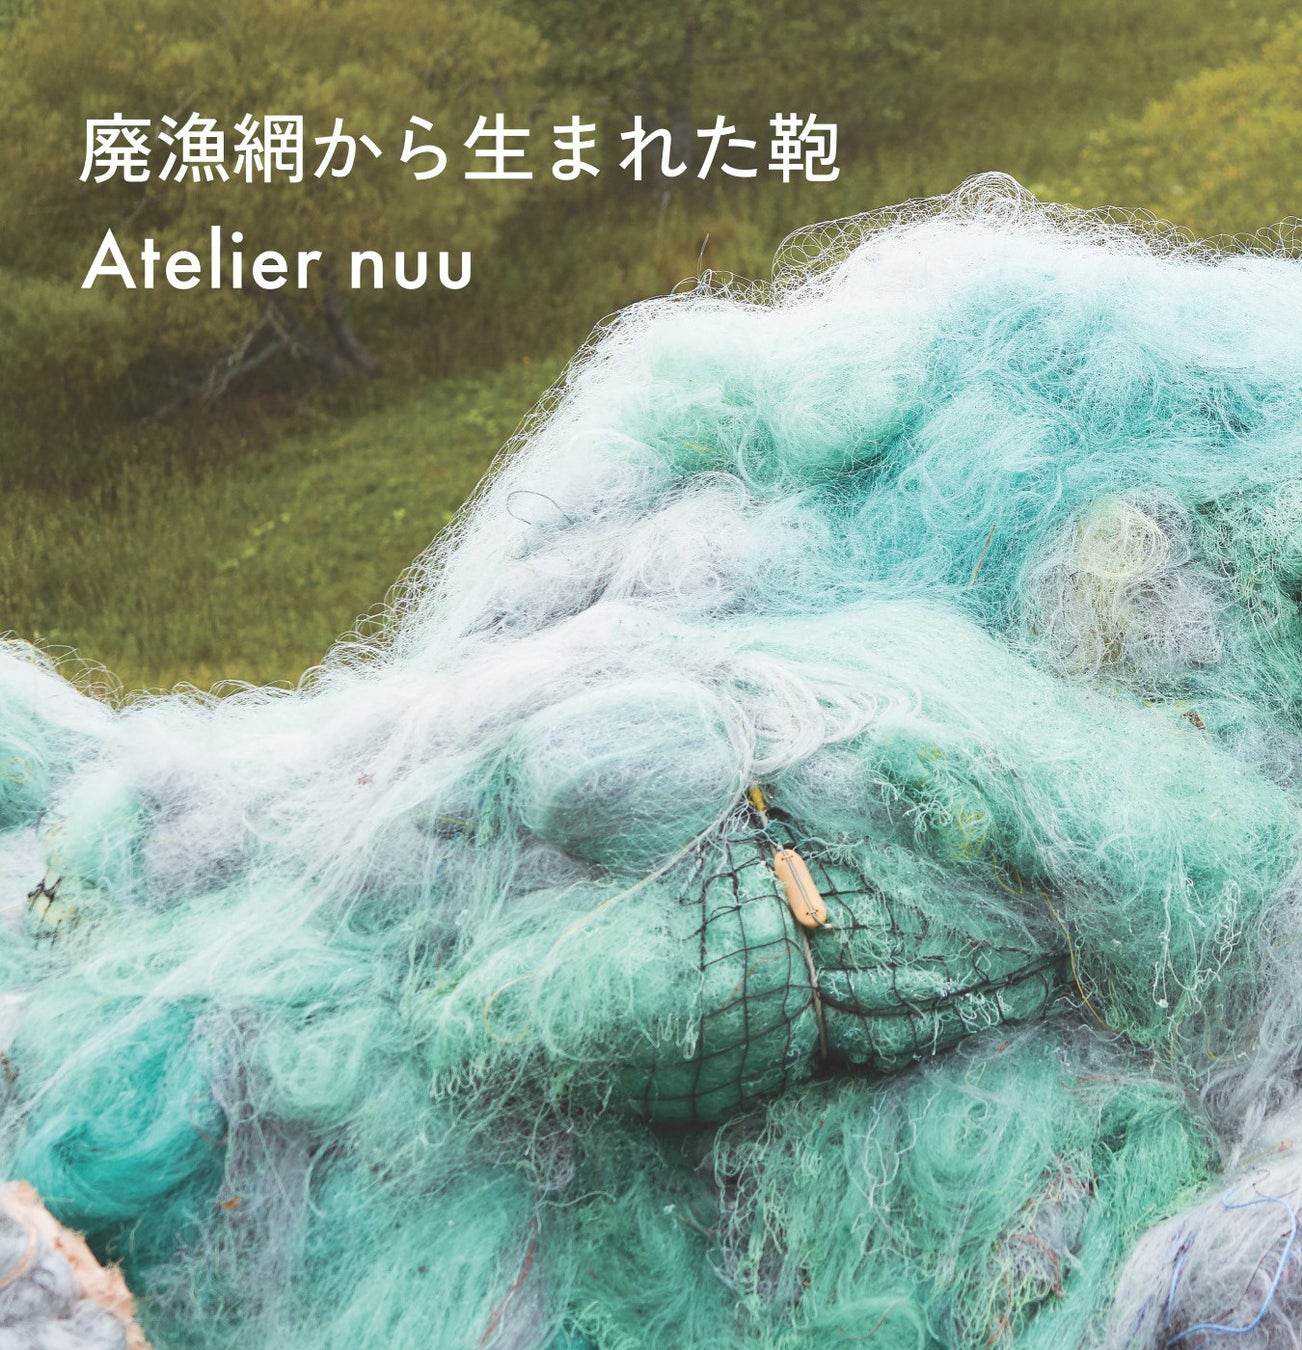 Atelier nuu ”廃漁網から生まれた鞄”がギフト・ショーLIFExDESIGNアワードでグランプリを受賞のサブ画像1